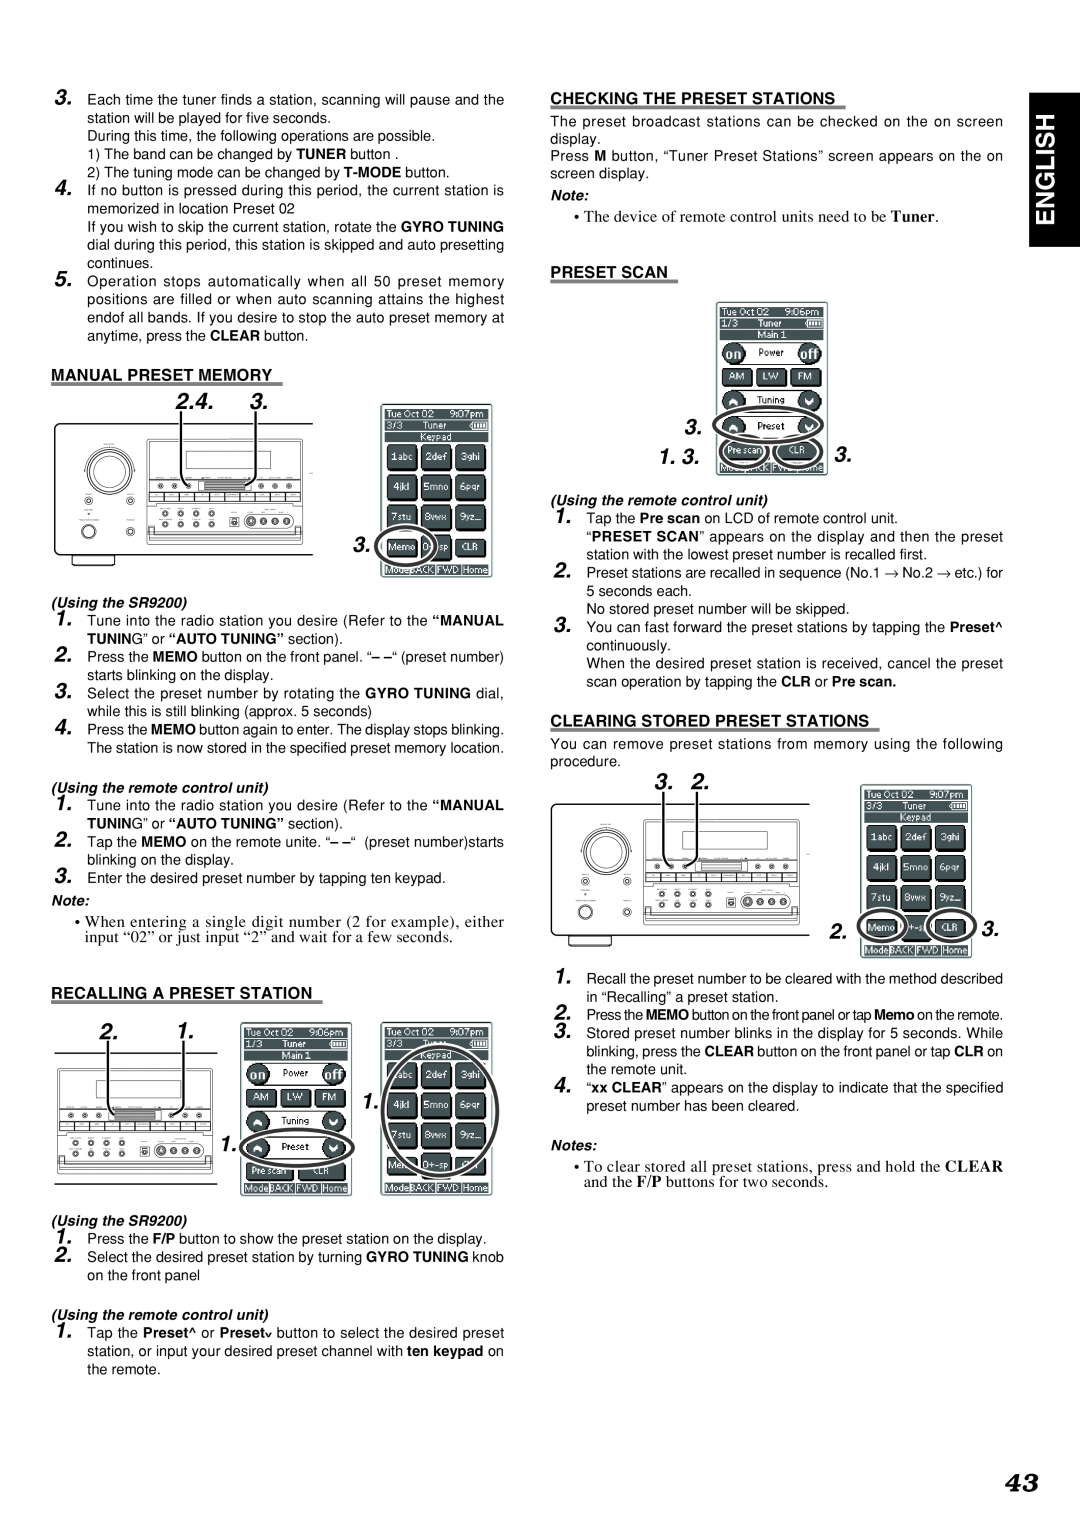 Marantz SR9200 2.4.3, English, Manual Preset Memory, Recalling A Preset Station, Checking The Preset Stations, Preset Scan 